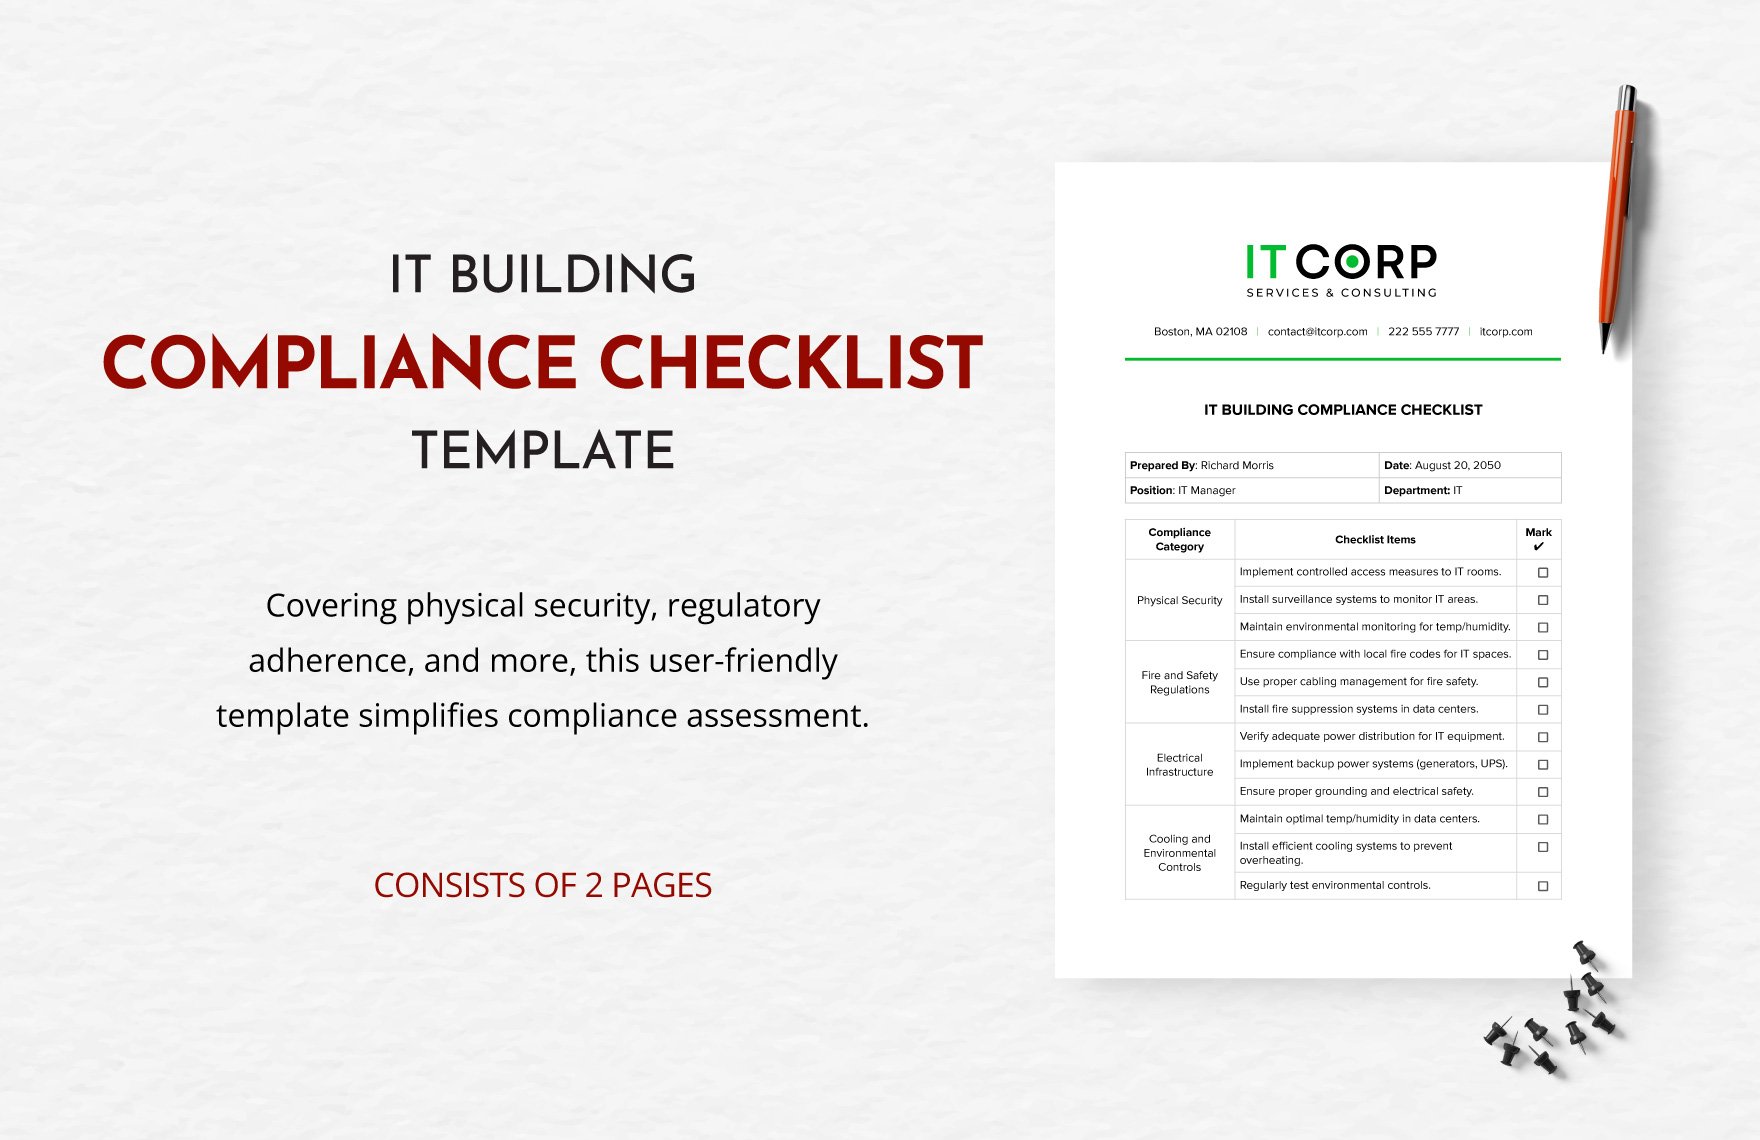 IT Building Compliance Checklist Template